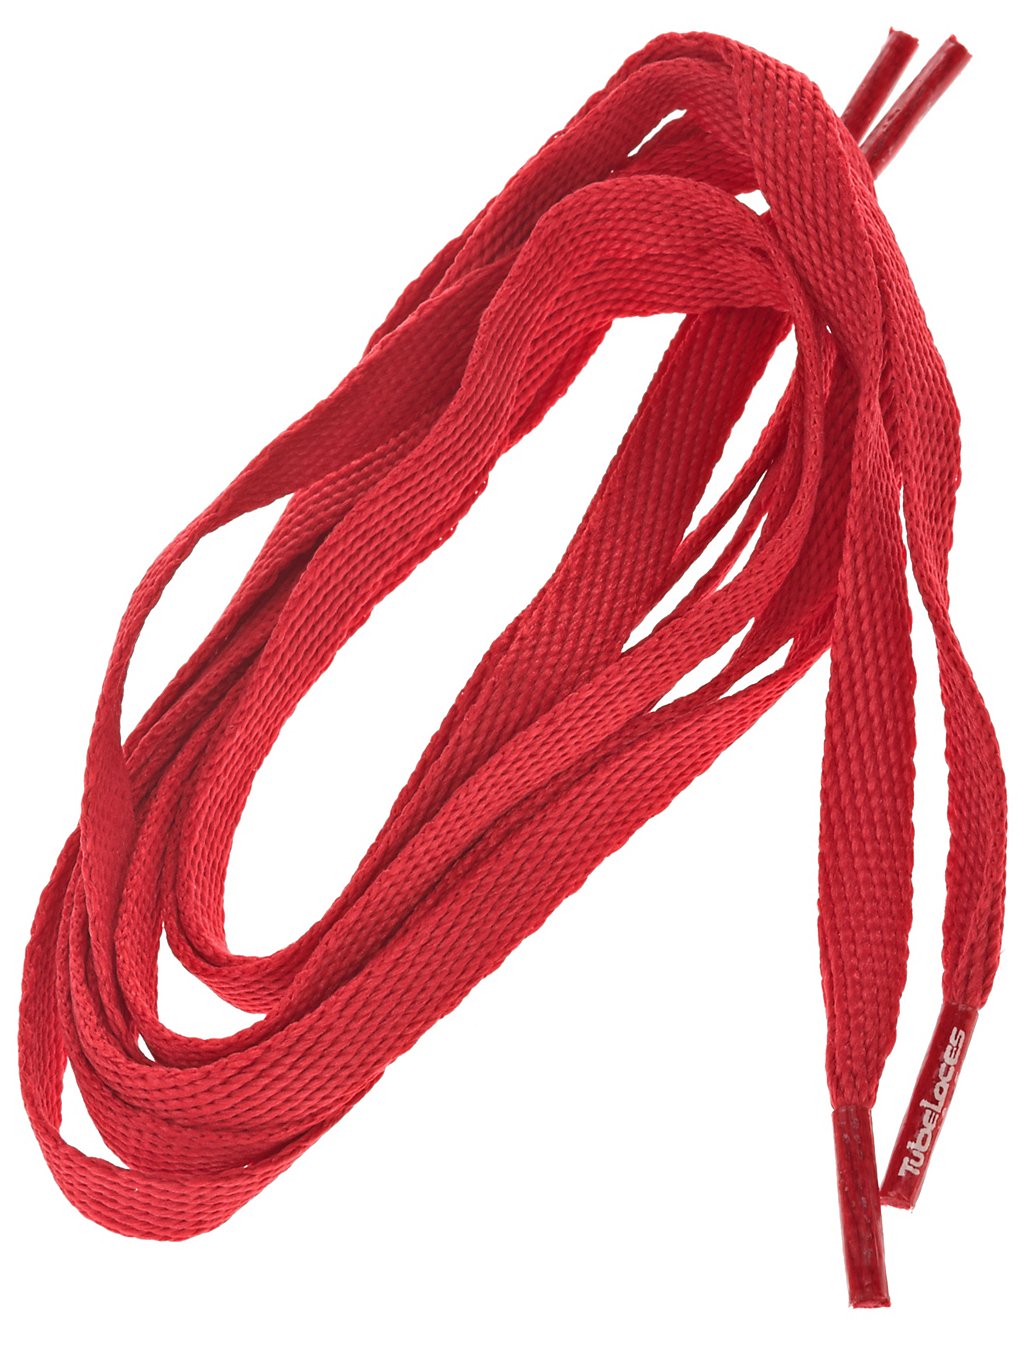 TubeLaces KMA Flat 120cm Shoelaces red